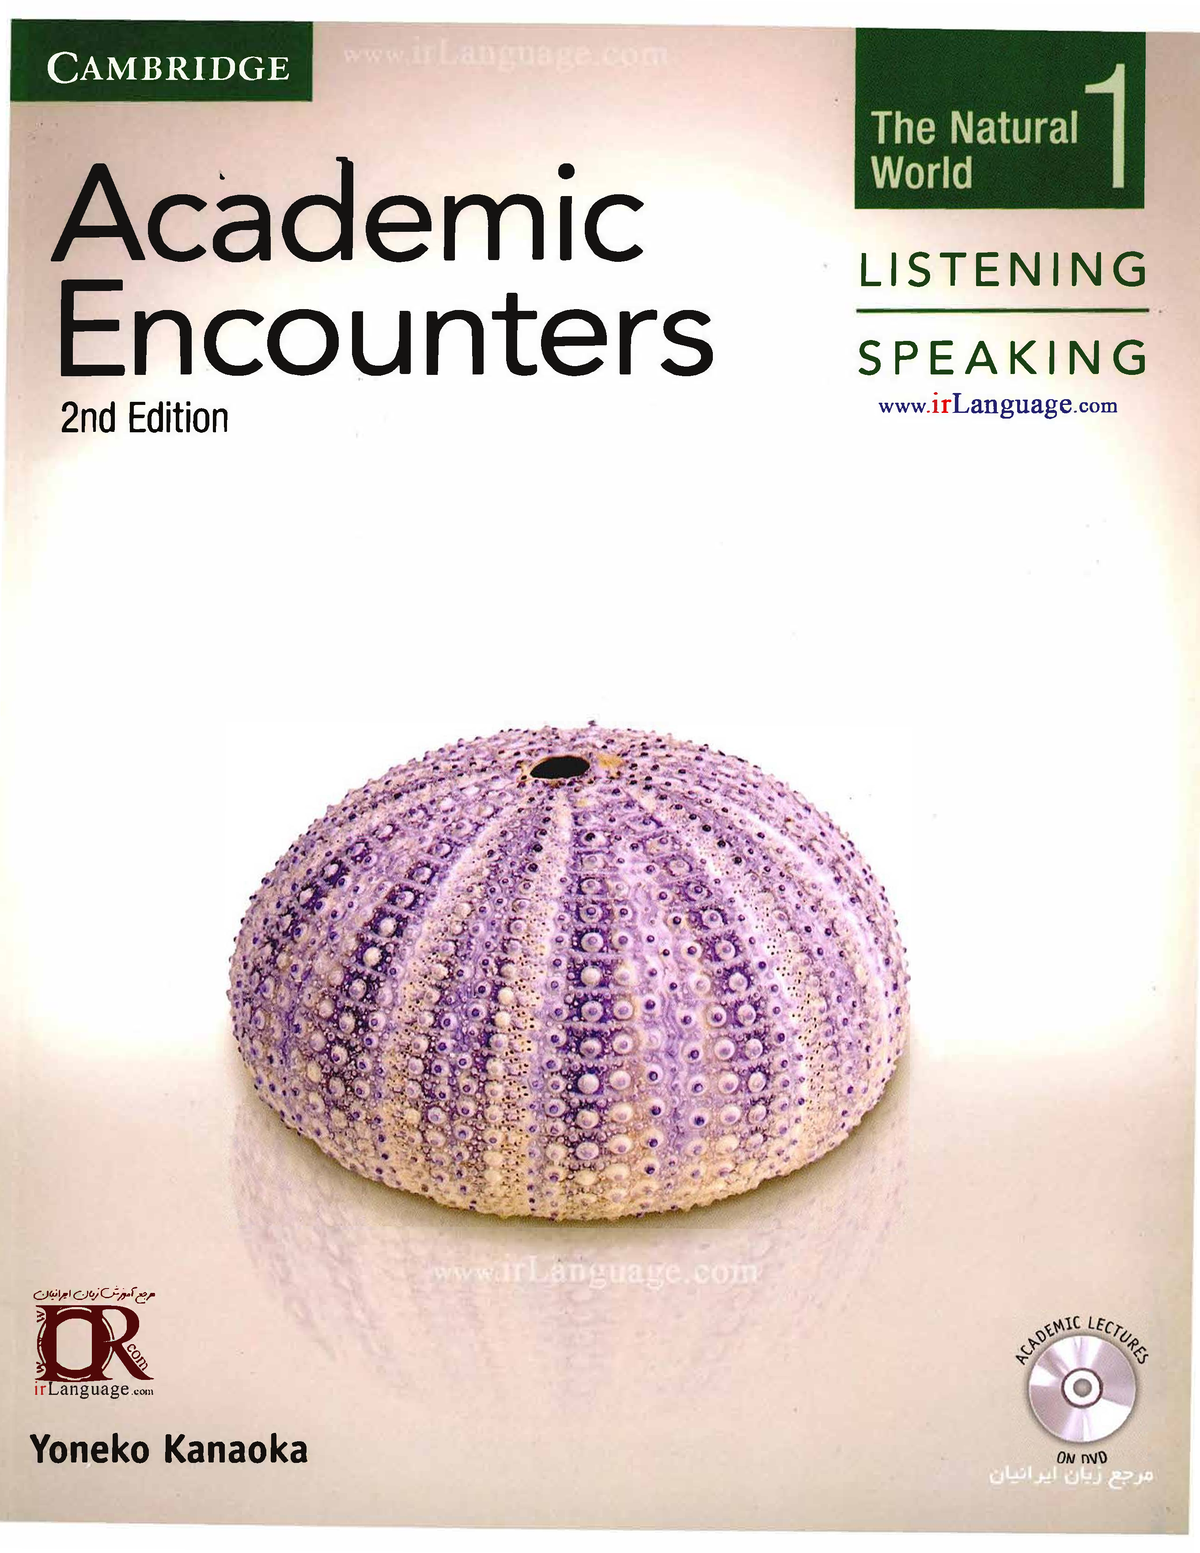 Academic Encounters 1dddd - CAMBRIDGE Academic Encounters 2nd